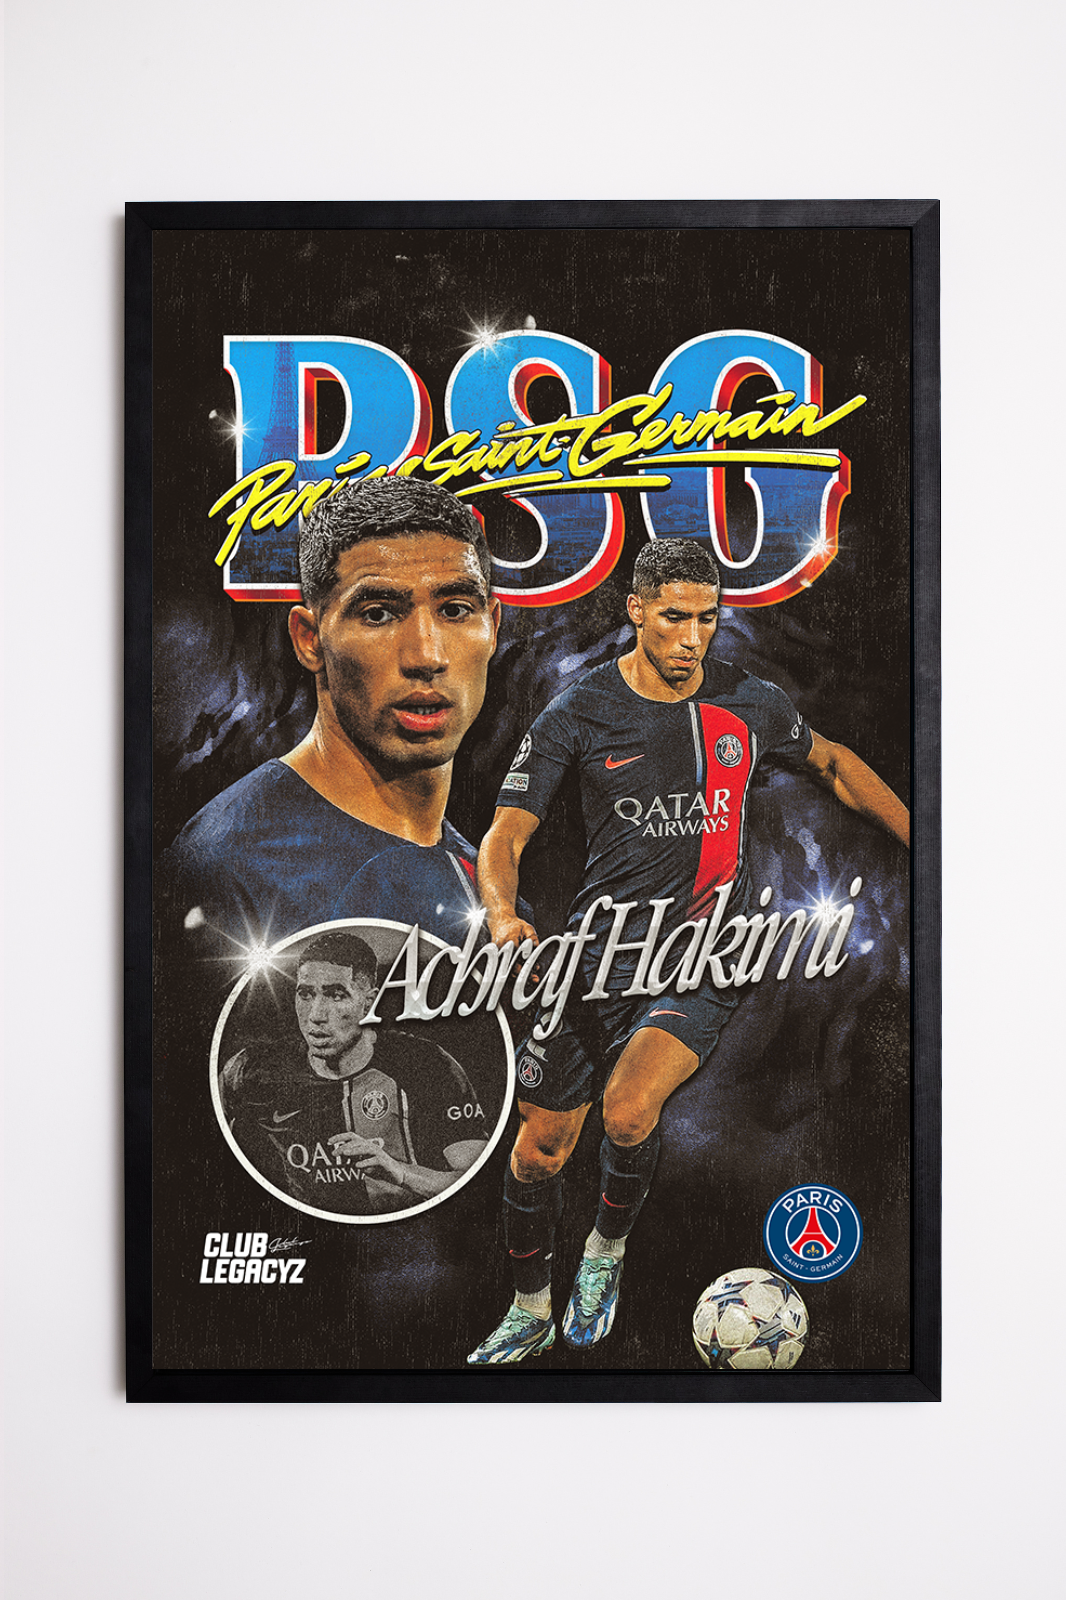 Paris Saint-Germain - Achraf Hakimi Bootleg Poster limited to 100